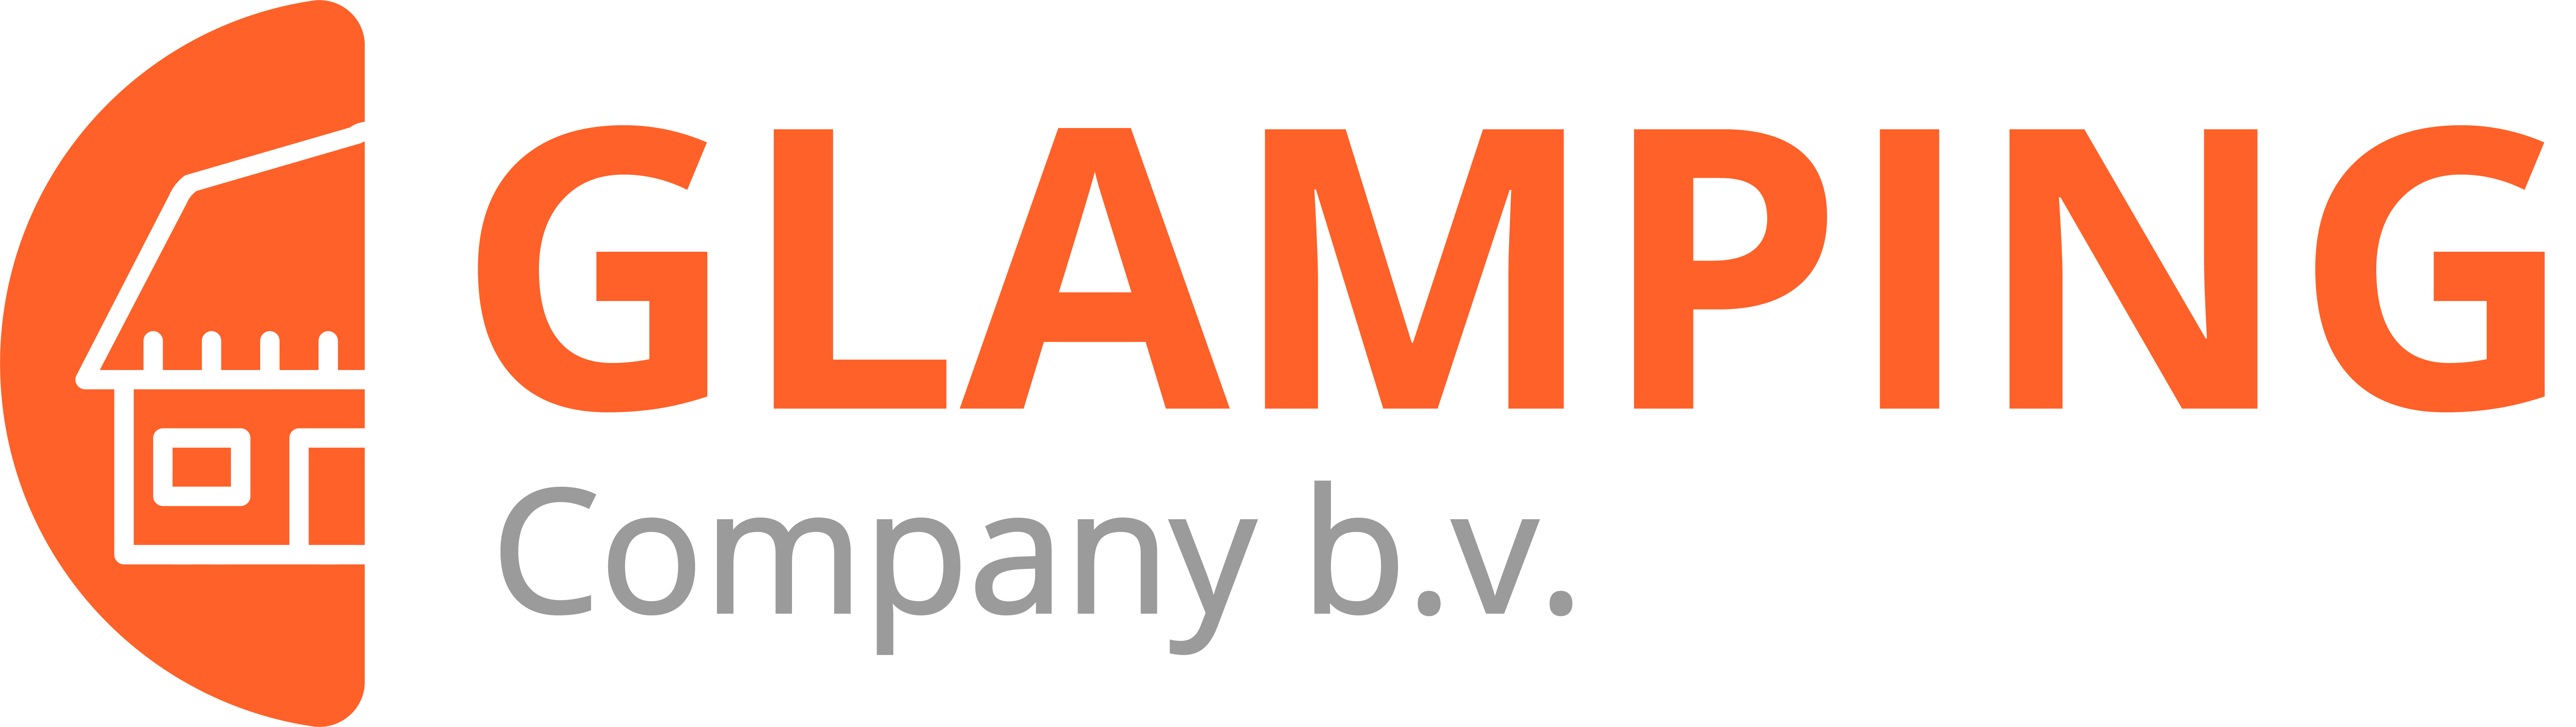 Glamping Company